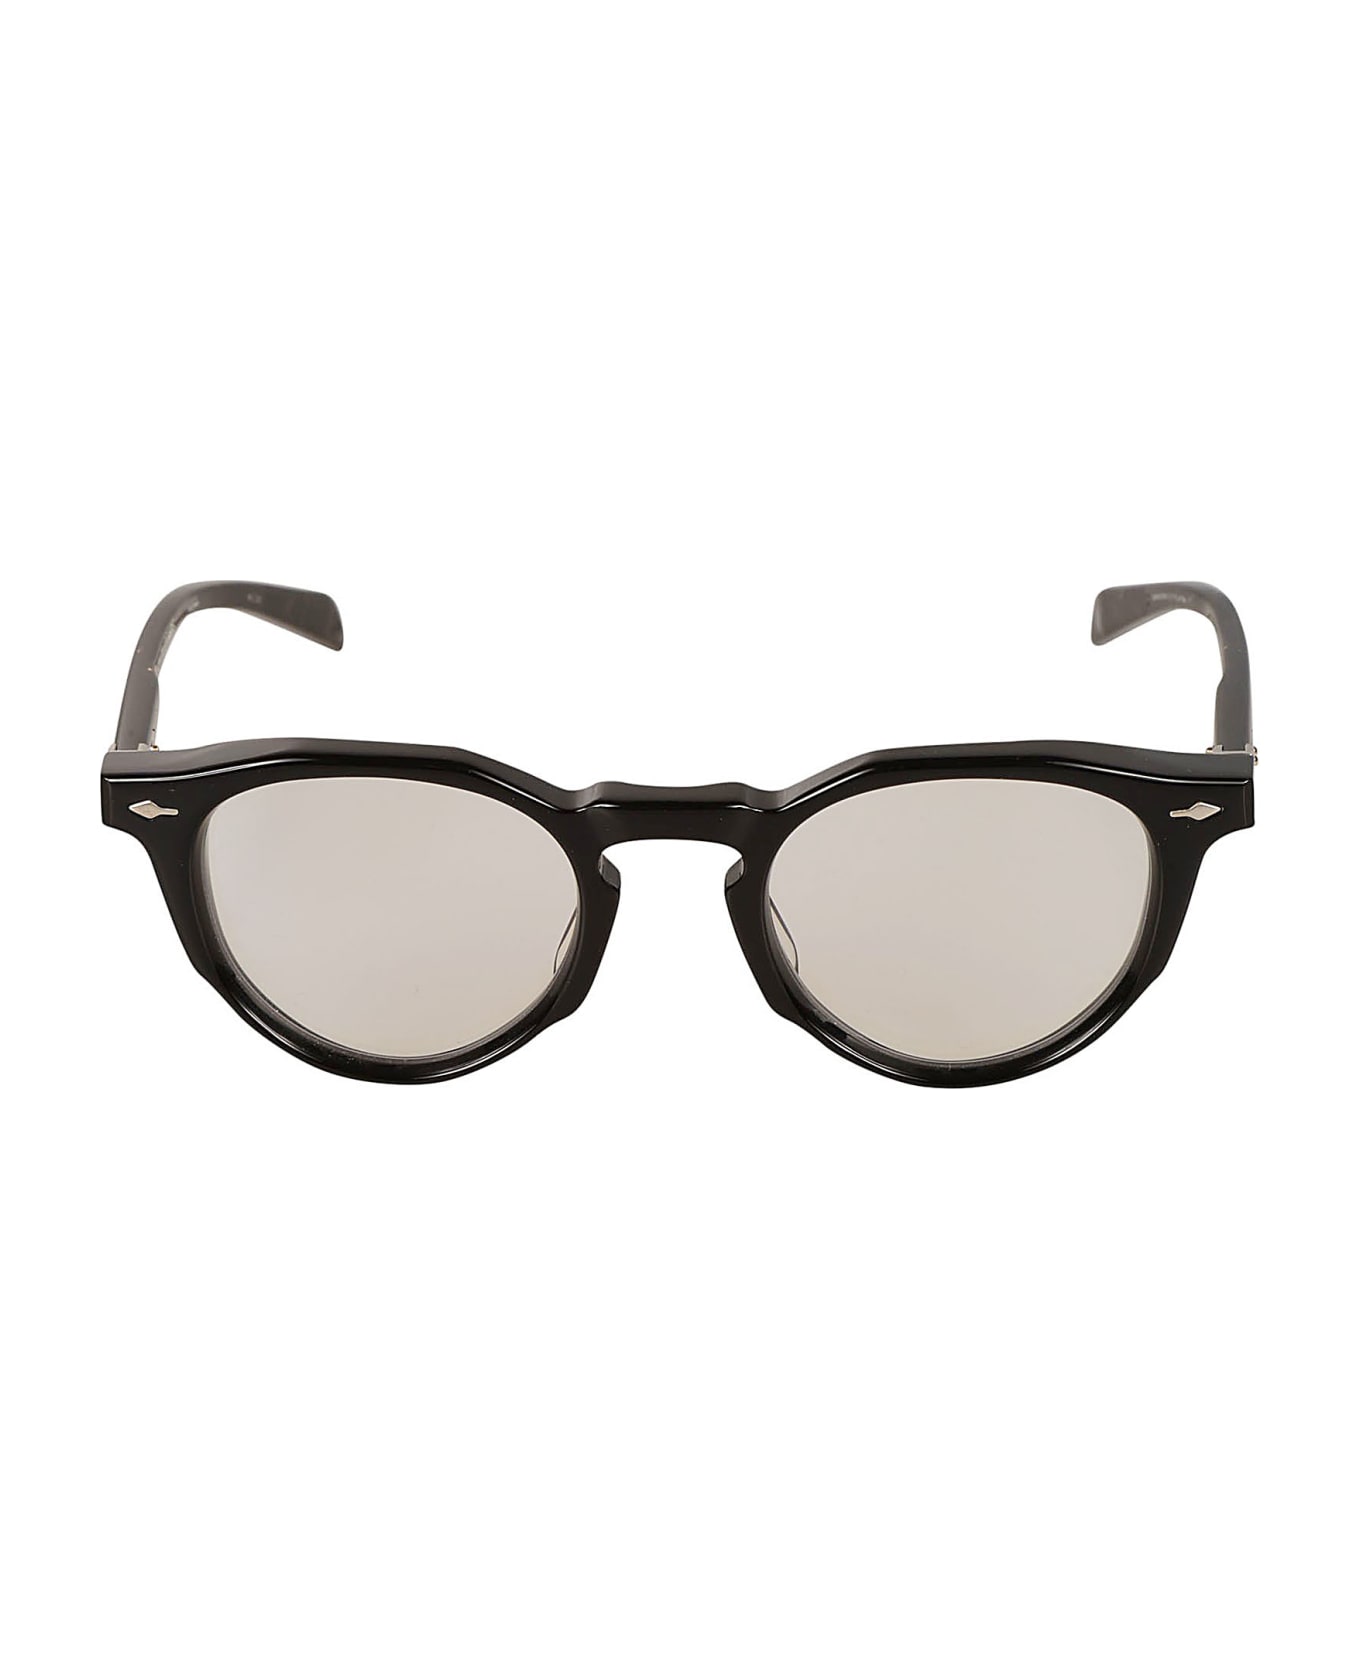 Jacques Marie Mage Sheridan Frame Glasses - black